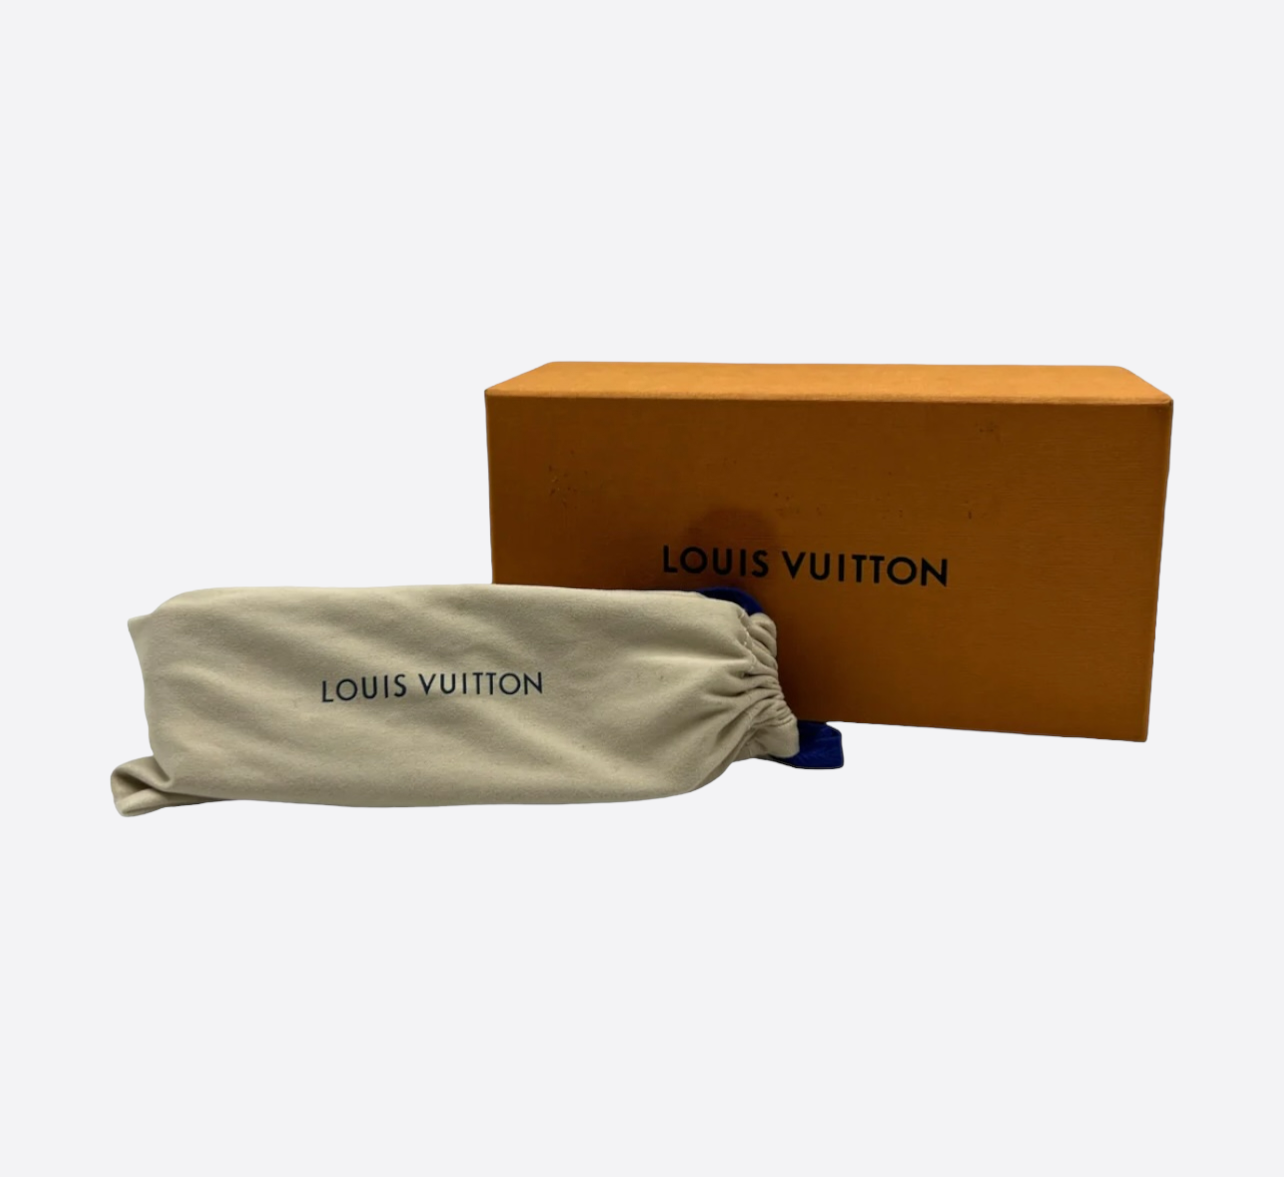 Louis Vuitton Black And Orange 1.1 Millionaire Sunglasses - SAVIC